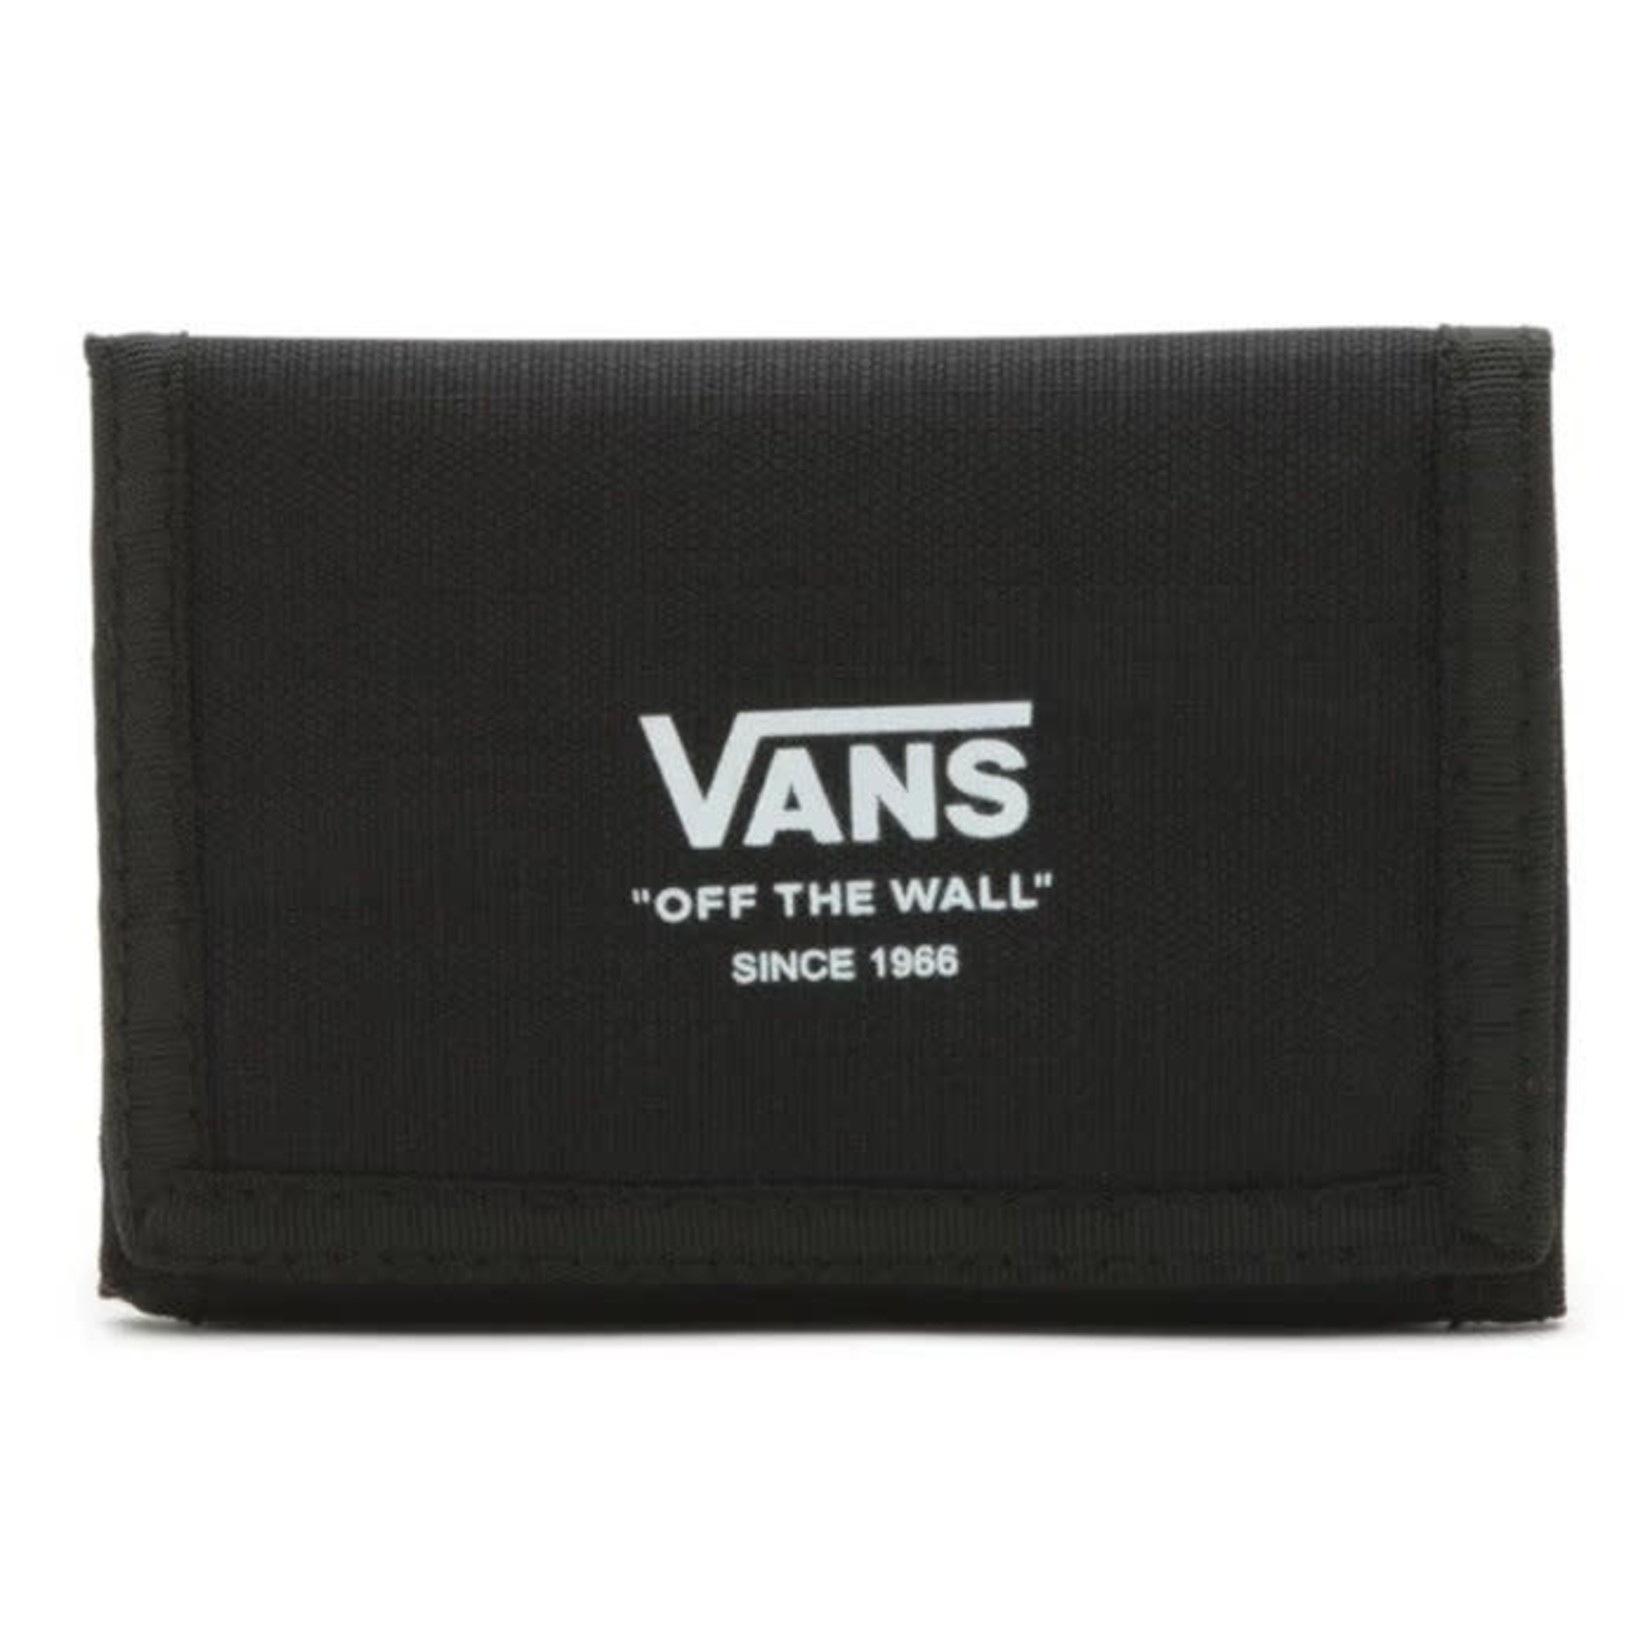 Vans Vans Gaines Wallet - Black